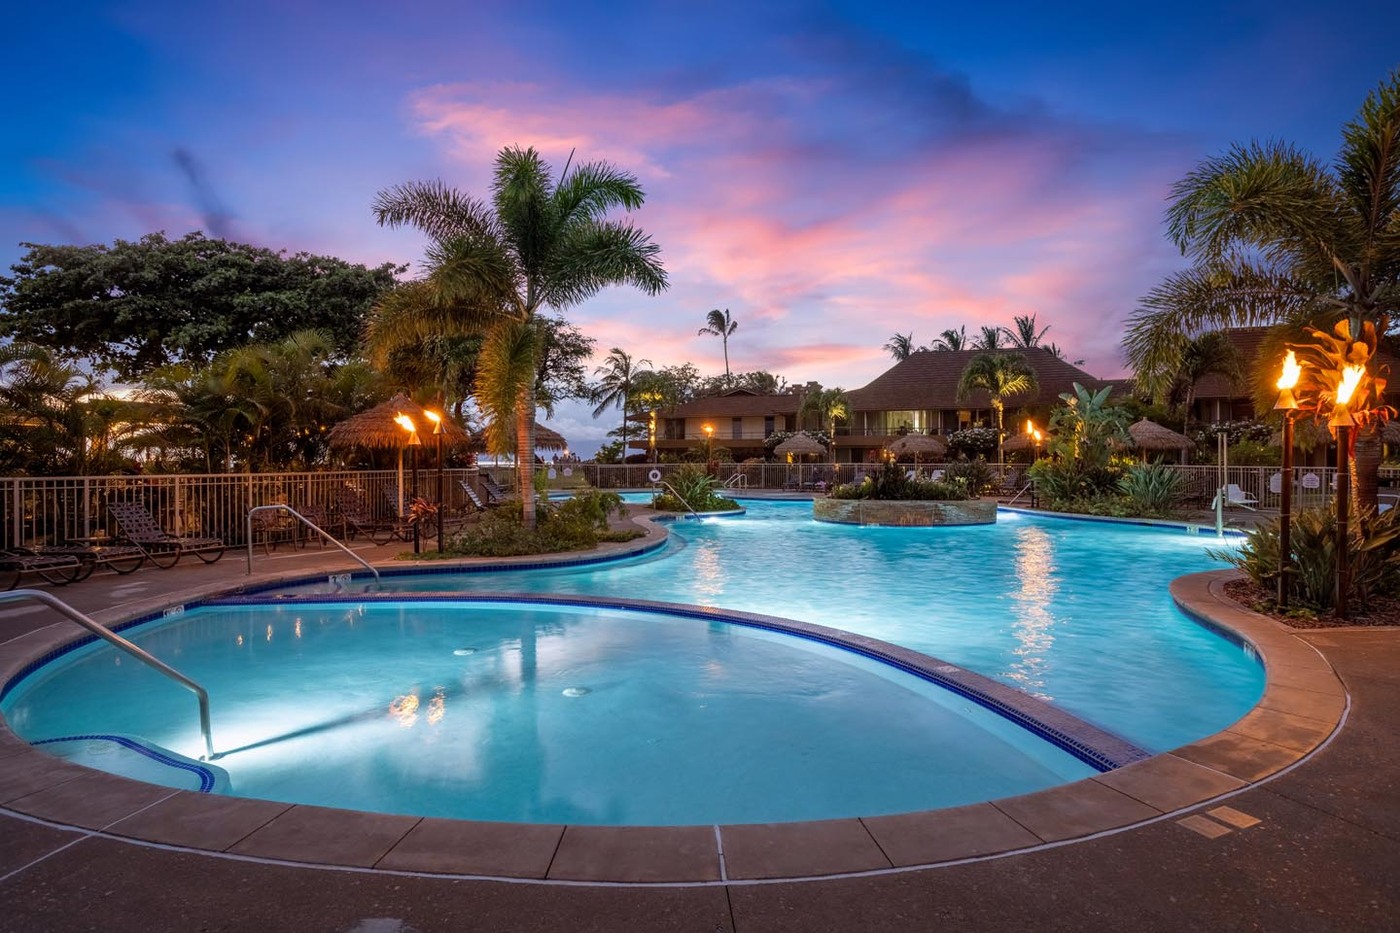 Maui Kaanapali Villas Pool under the evening sky